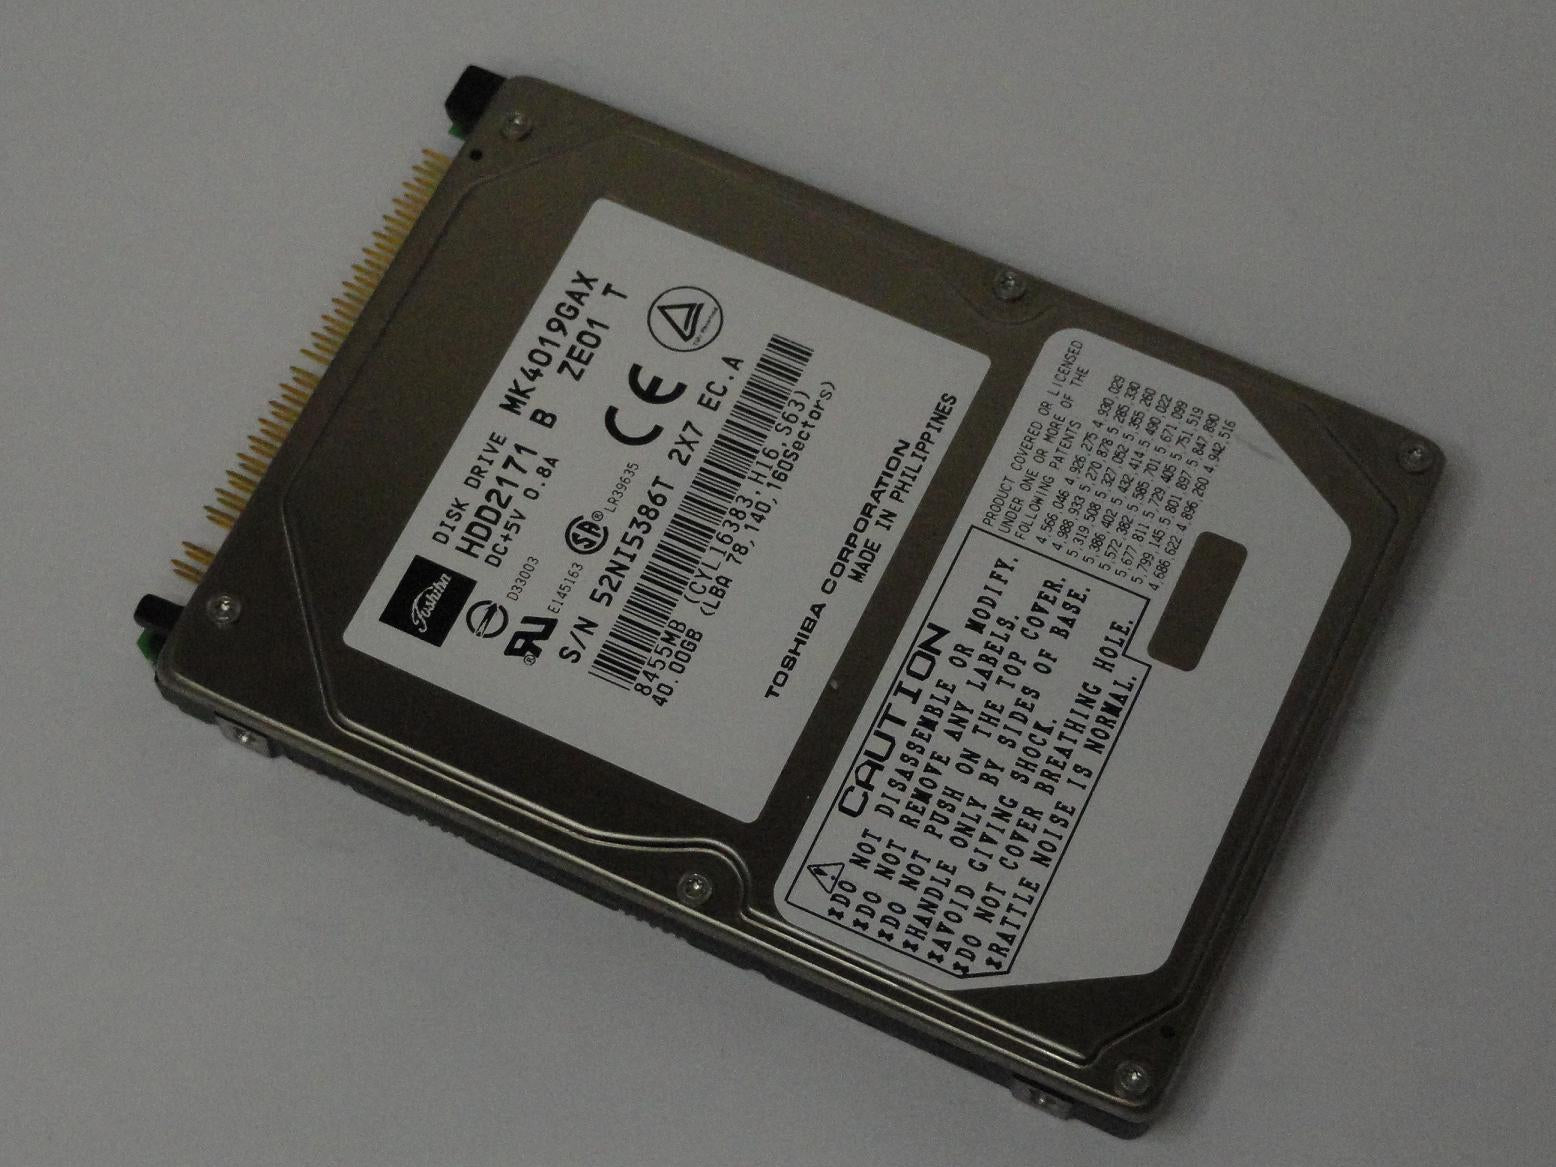 HDD2171 - Toshiba 40GB IDE 5400rpm 2.5in HDD - Refurbished